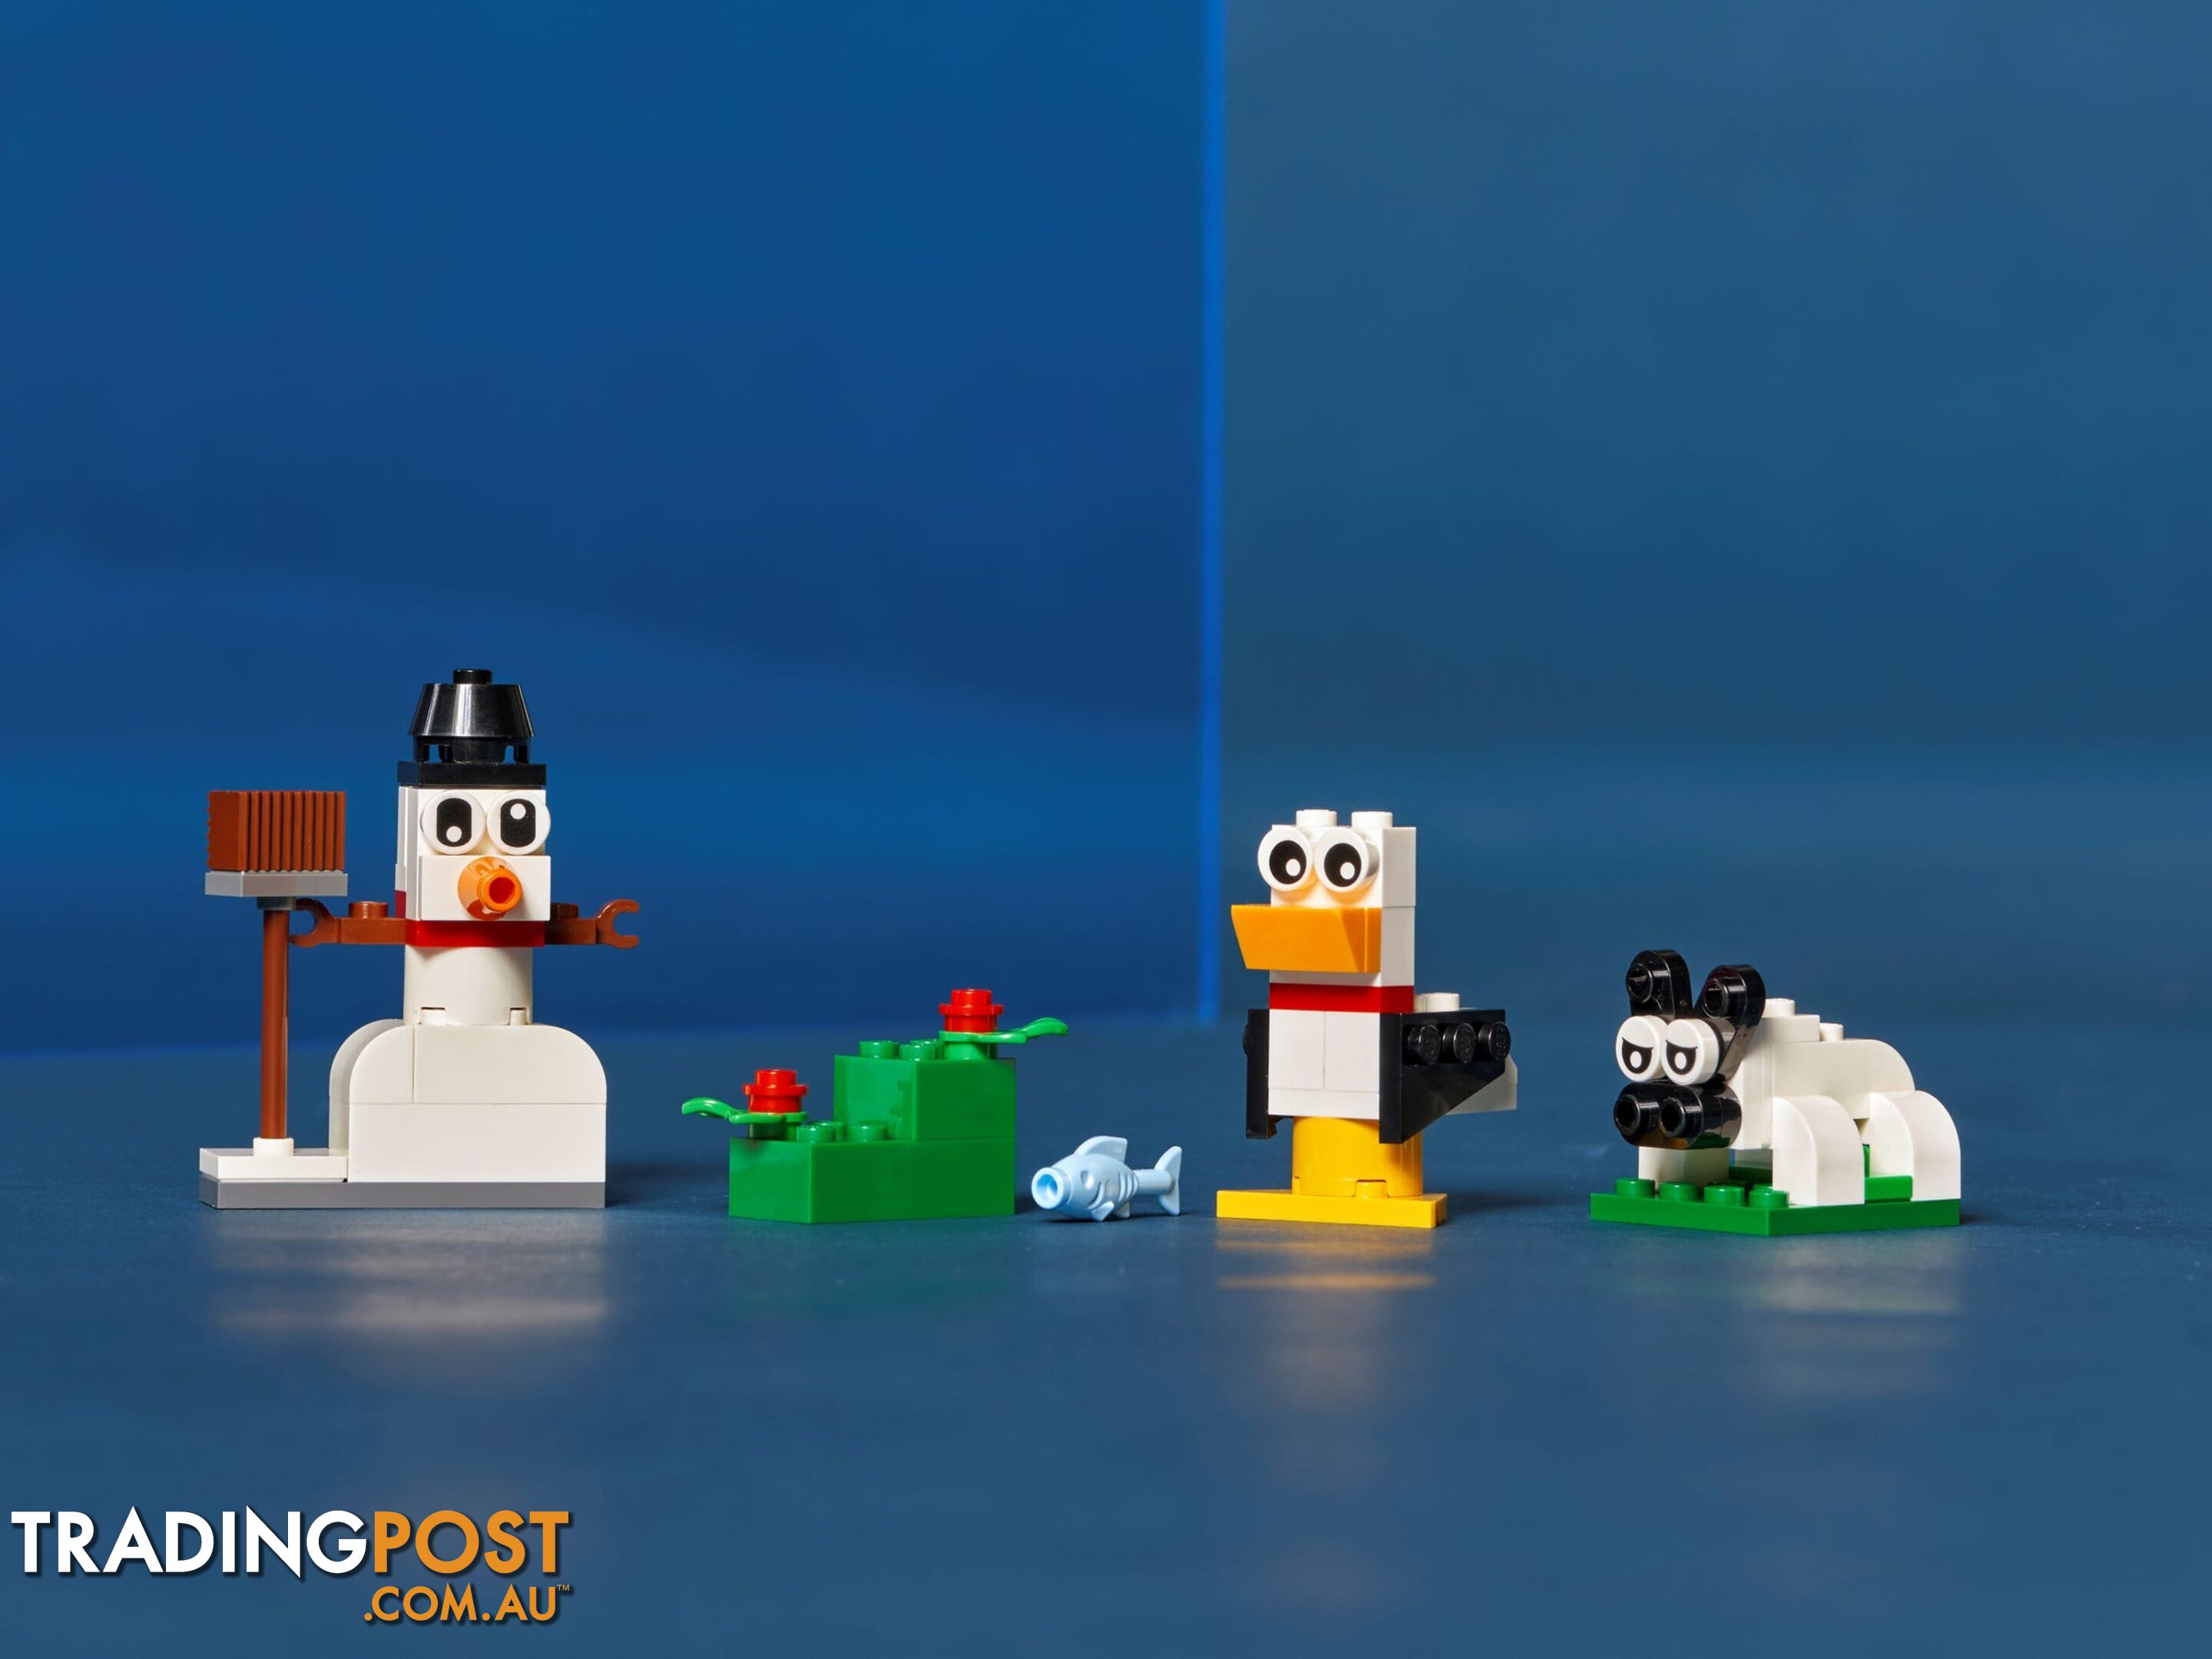 LEGO 11012 Creative White Bricks - Classic - 5702016889277